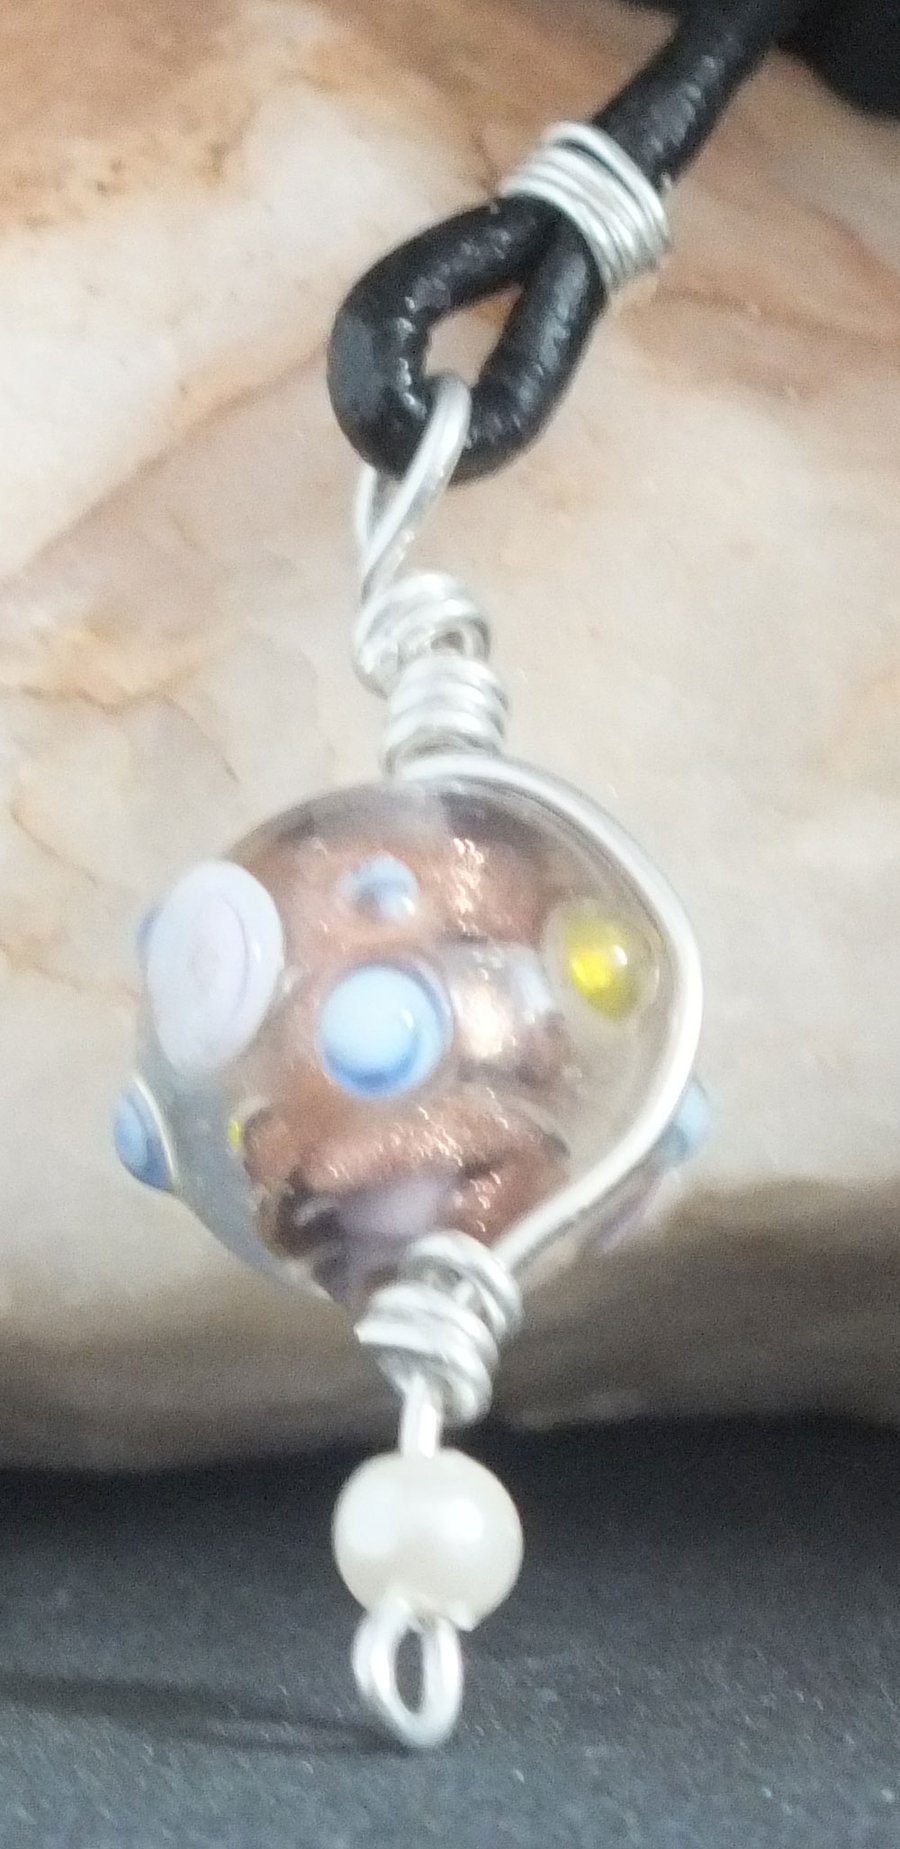 Fused glass bead pendant